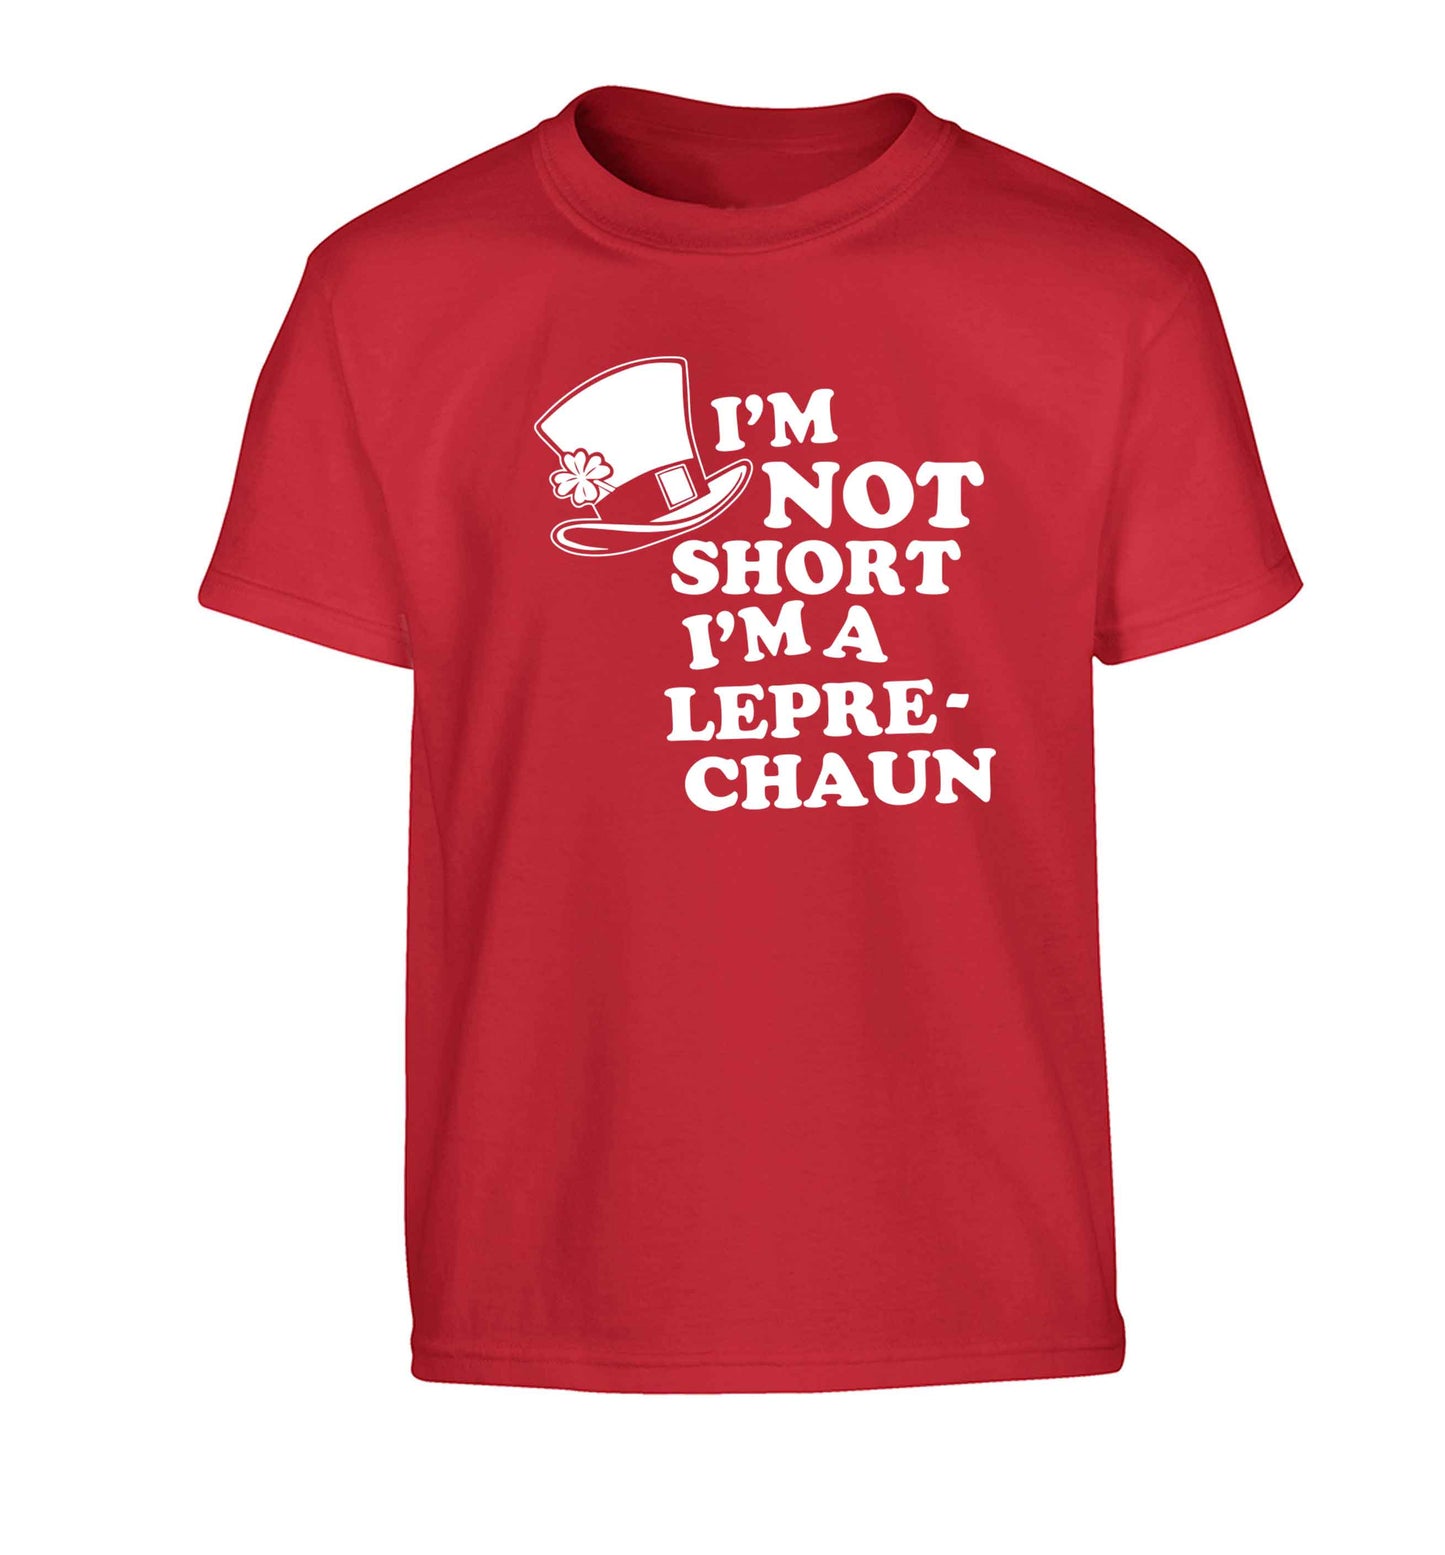 I'm not short I'm a leprechaun Children's red Tshirt 12-13 Years